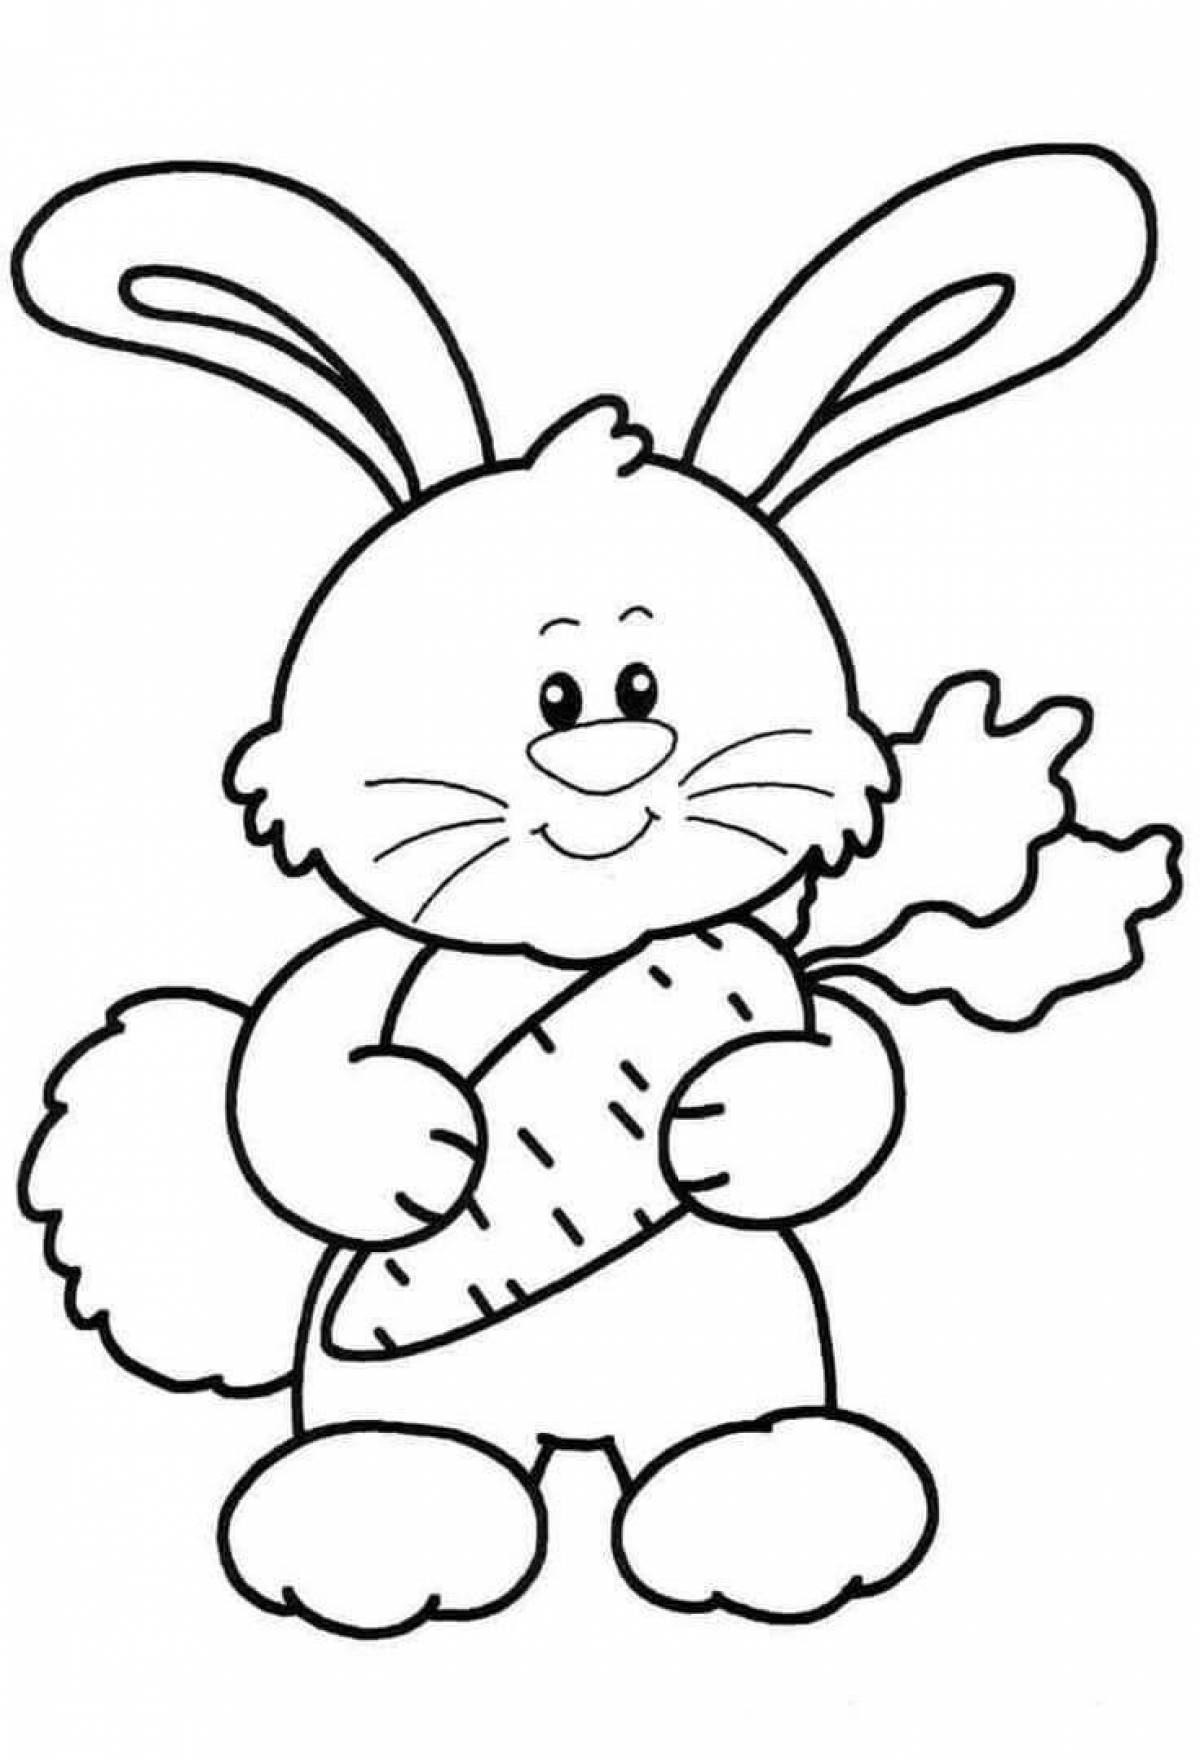 Plush coloring page rabbit image